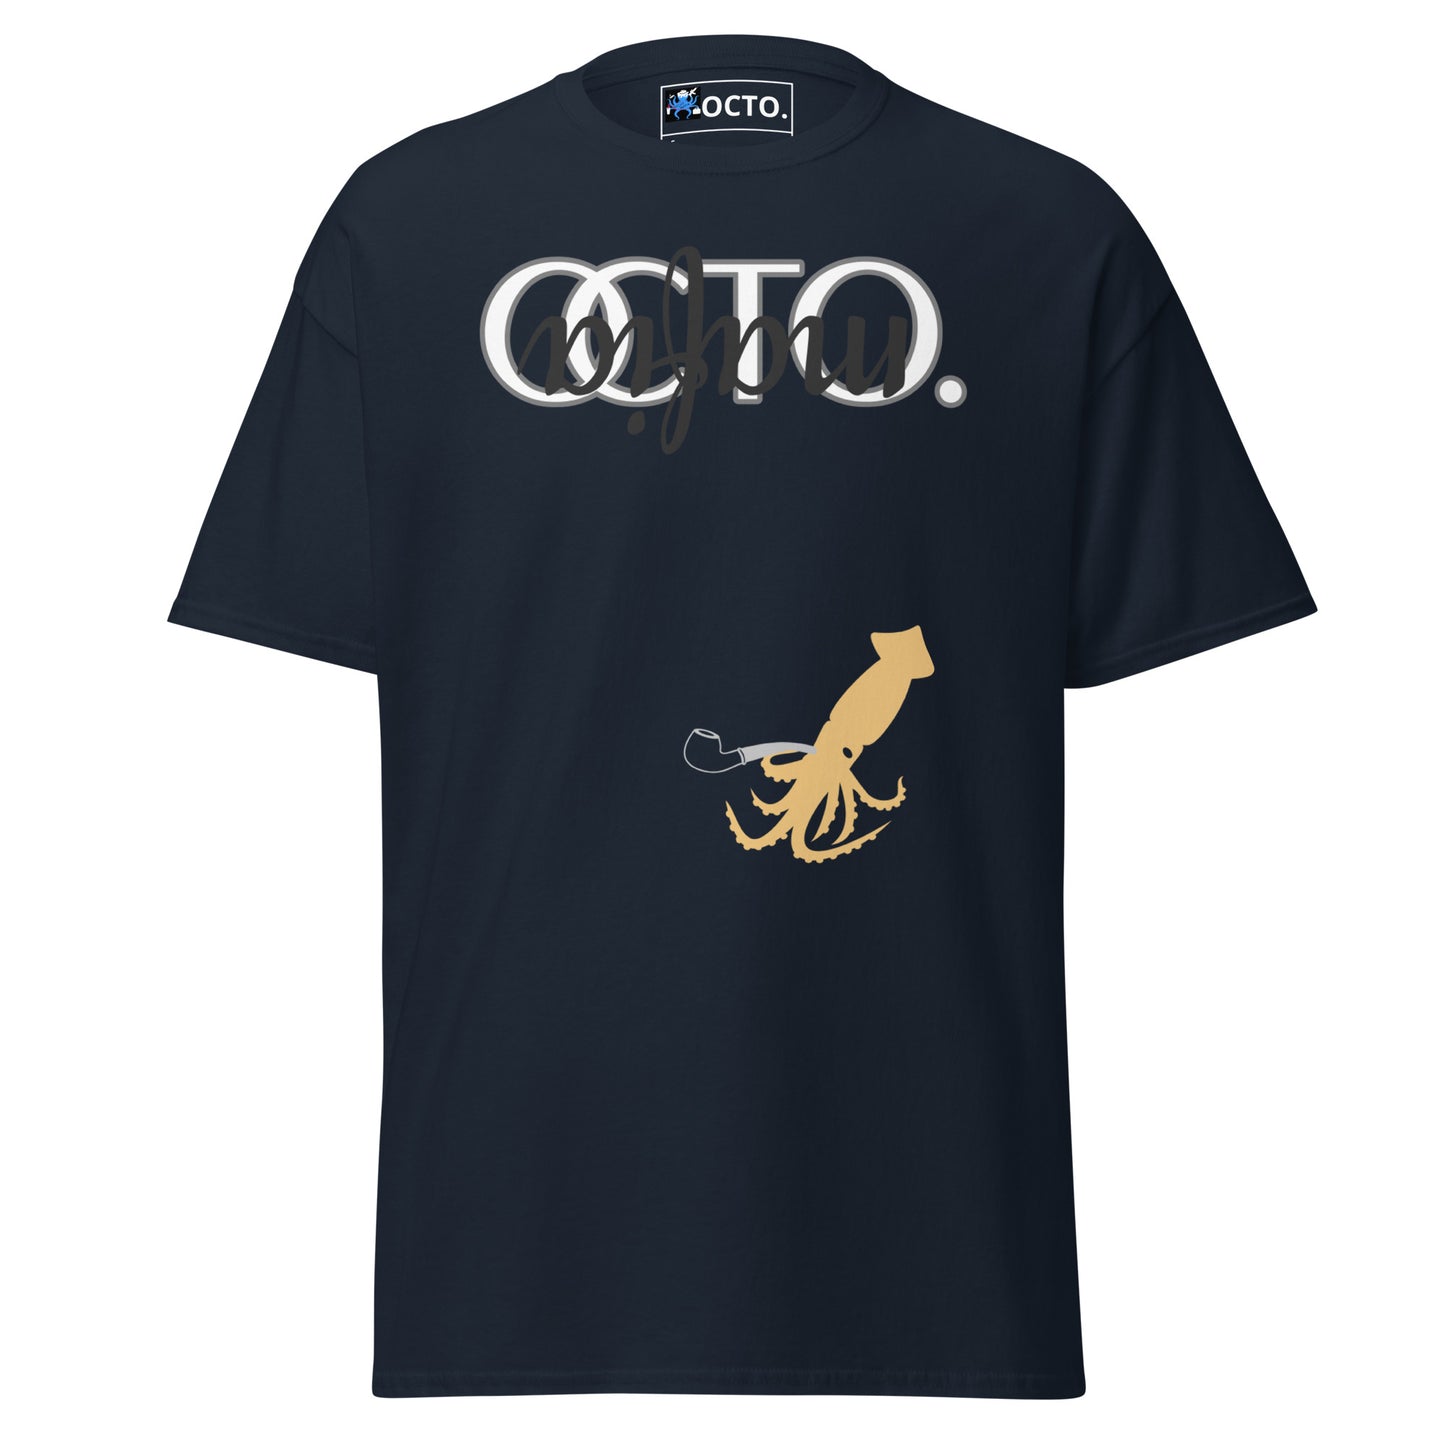 Octo. Mafia (high class) T-shirt